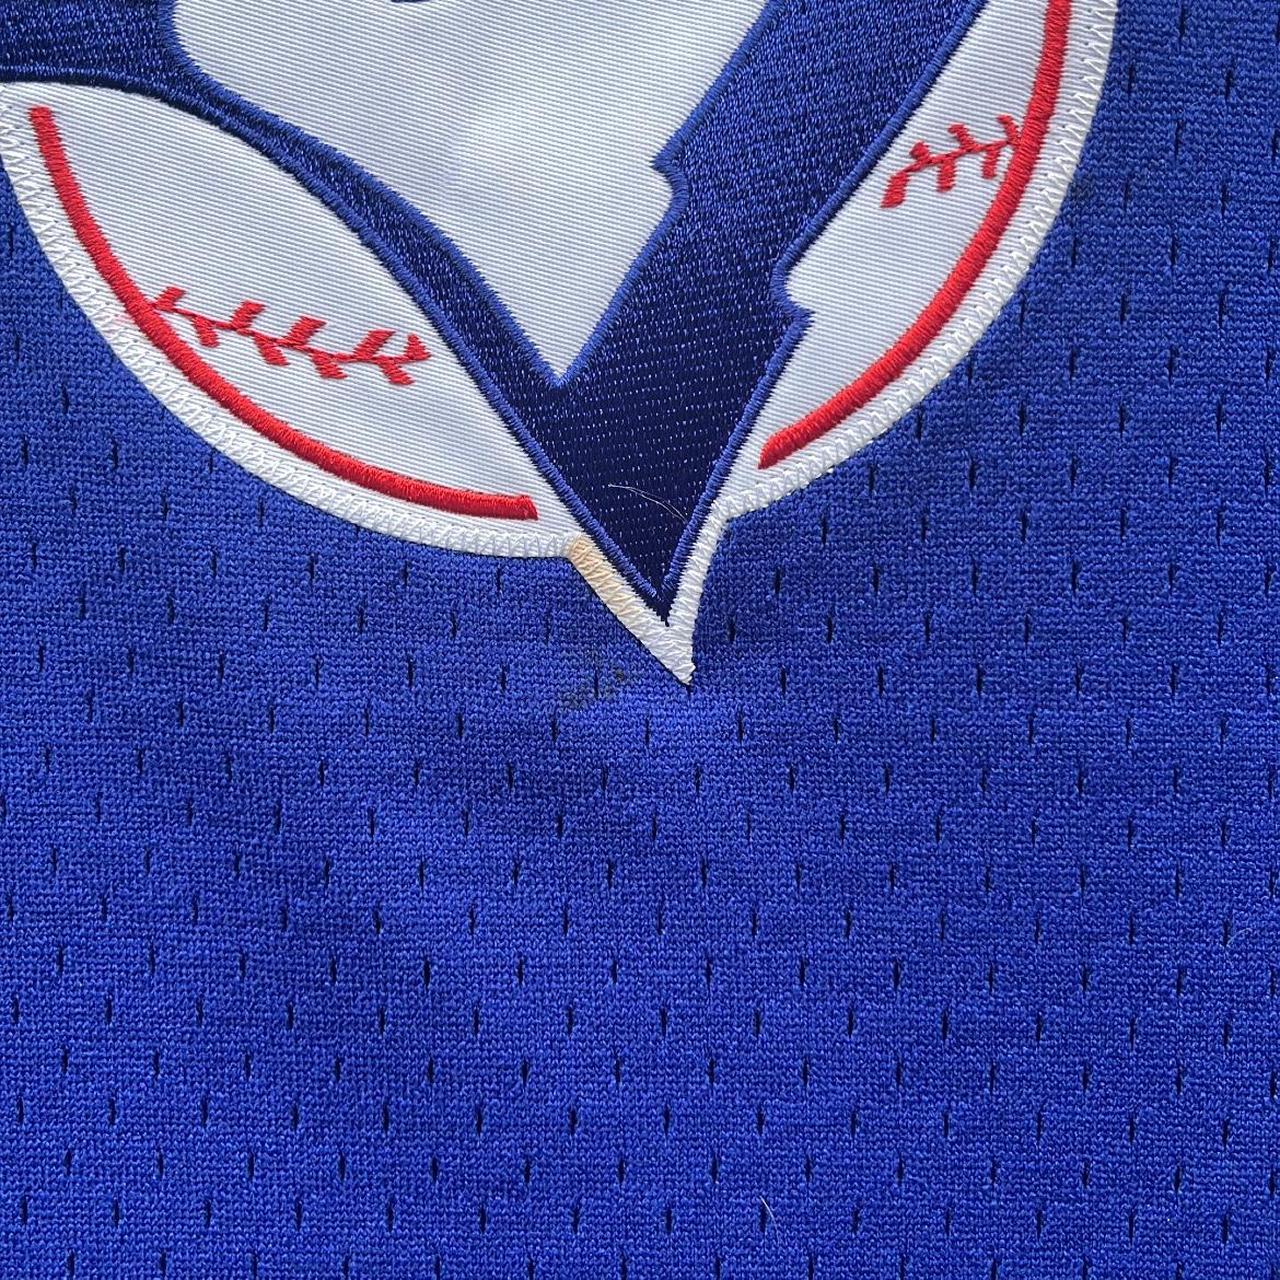 Mitchell & Ness Toronto Blue Jays #29 Joe Carter Mesh Batting Practice  Jersey